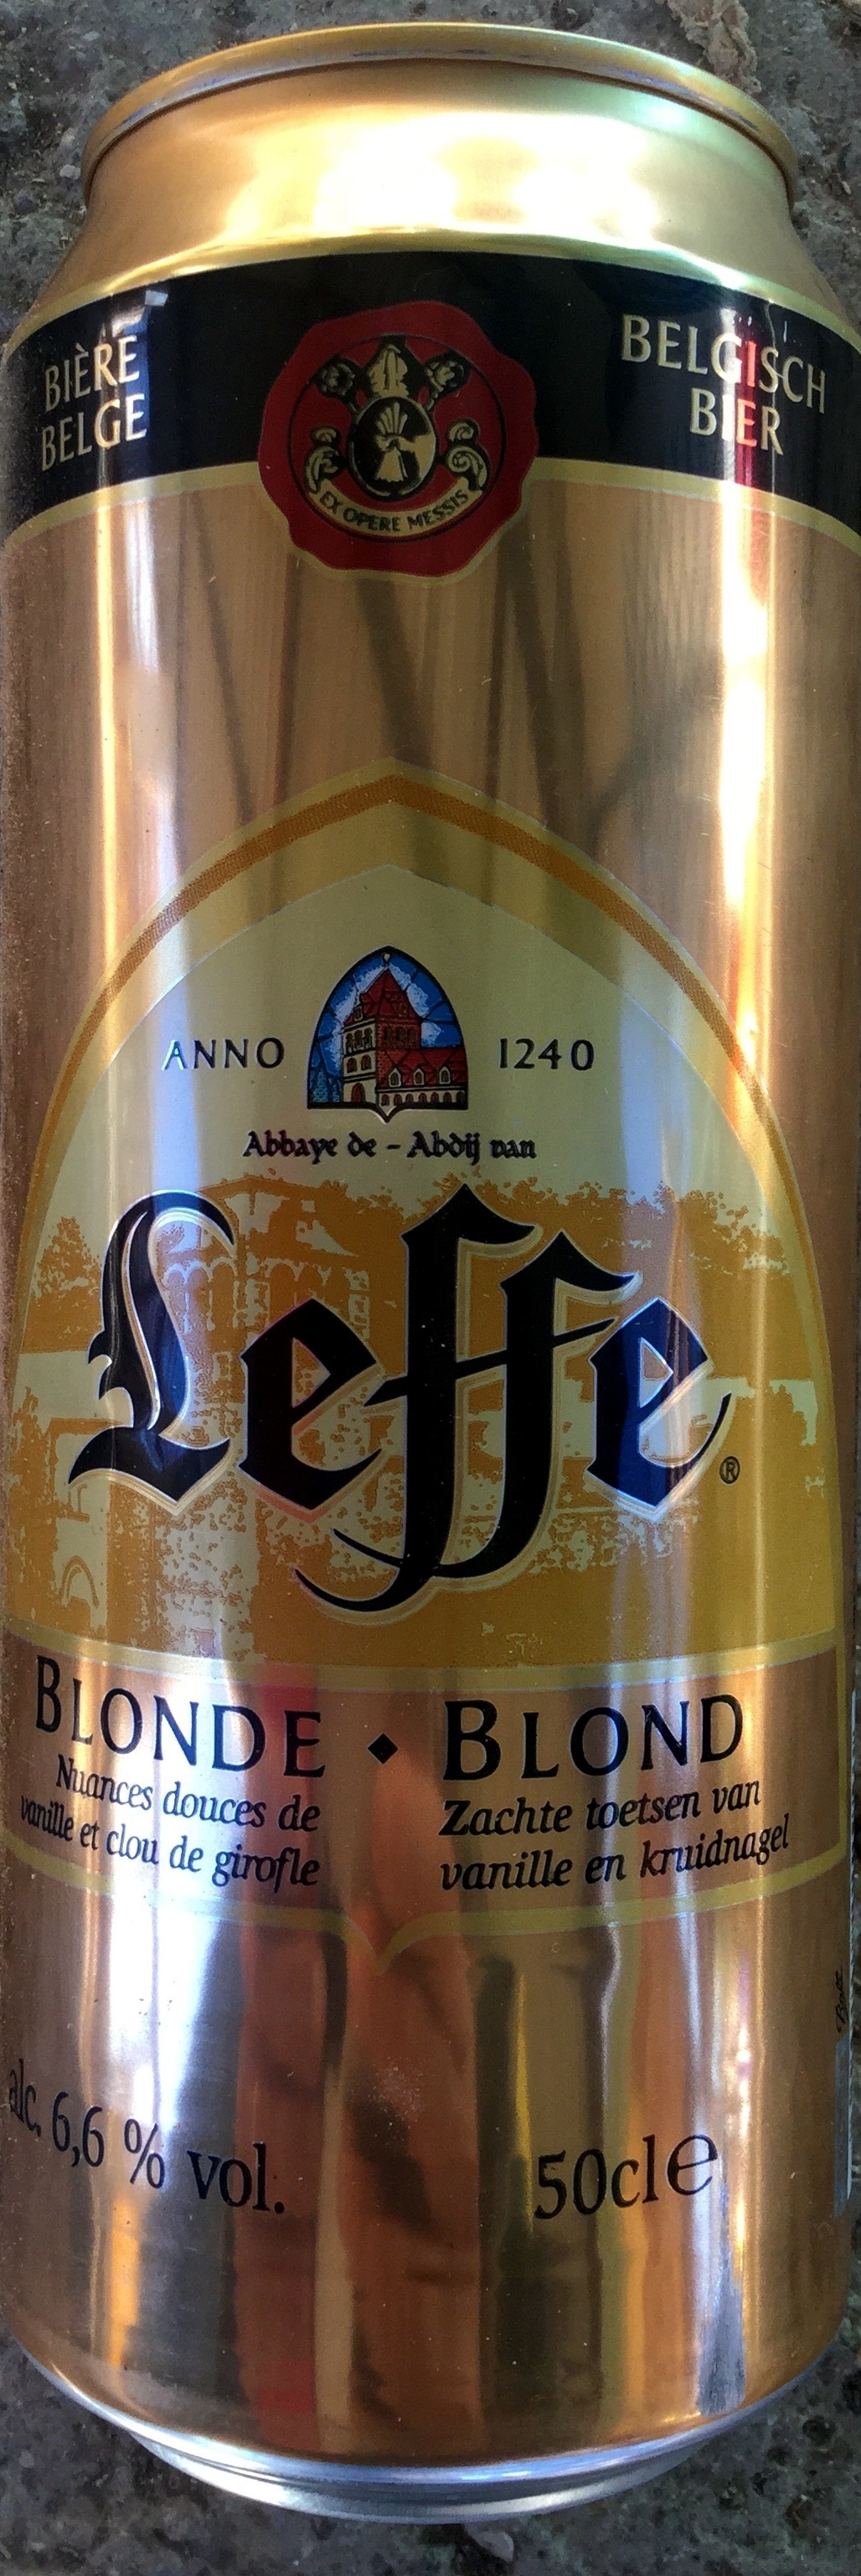 Leffe,AB-InBev - Produit